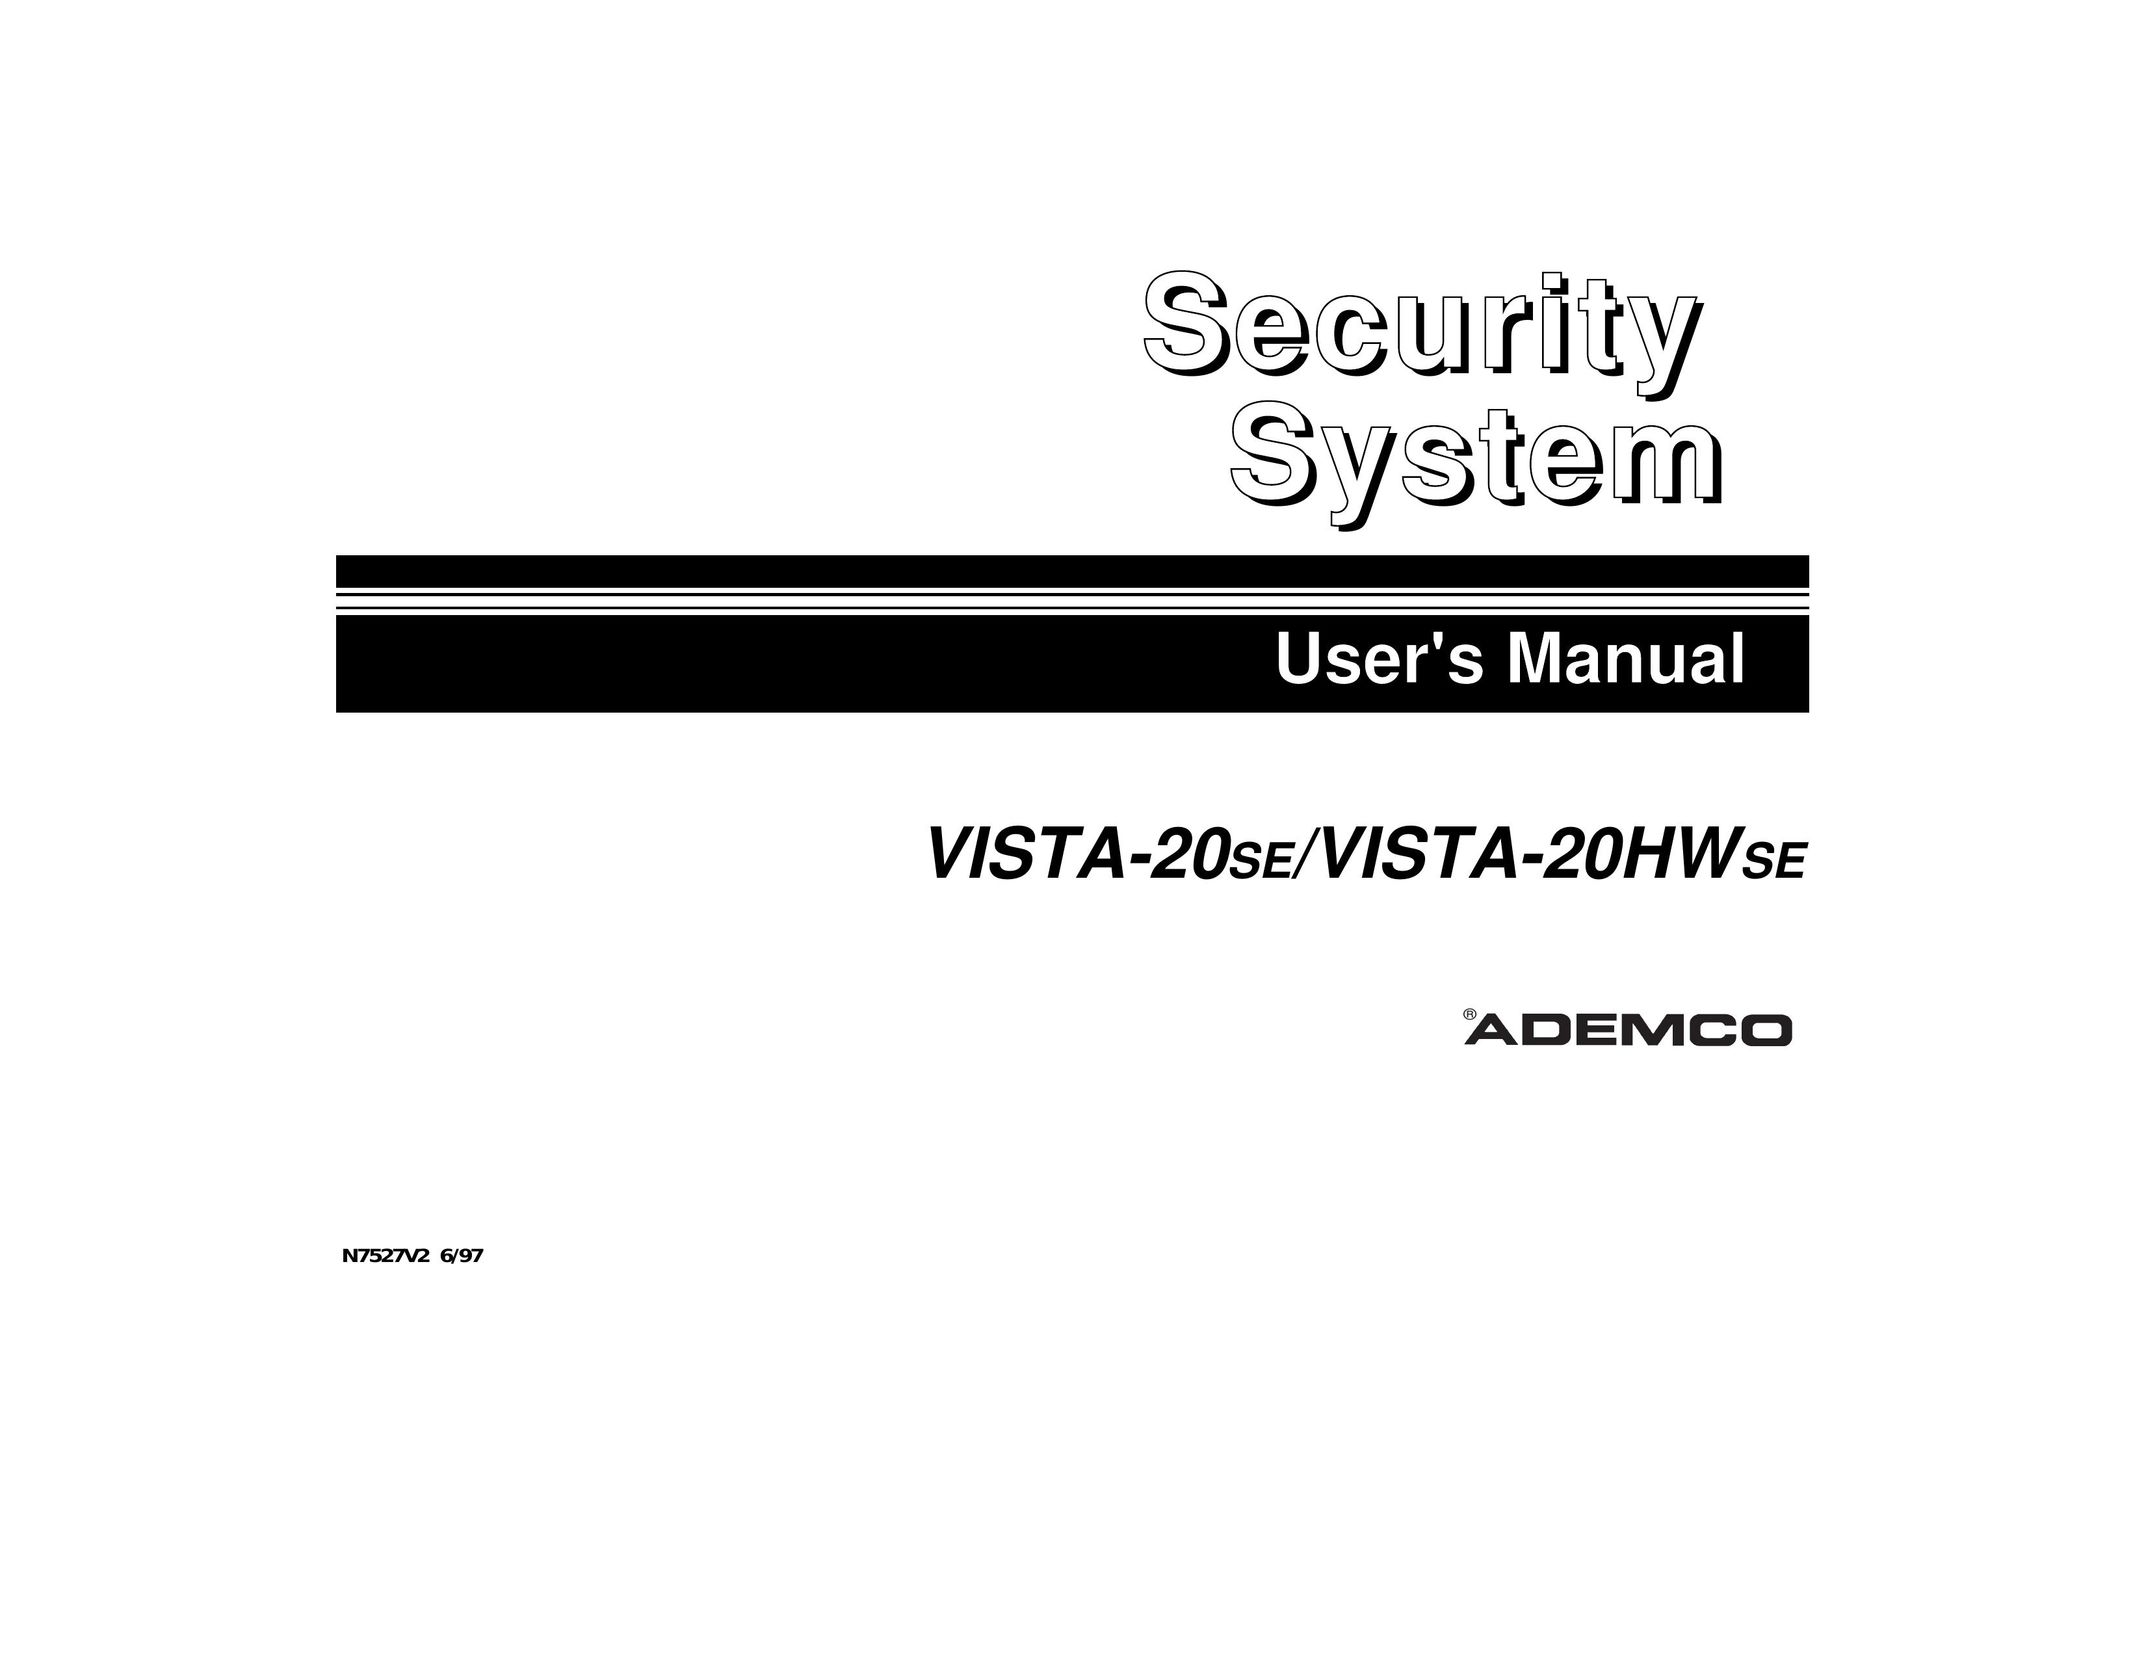 Vista VISTA-20SE Home Security System User Manual